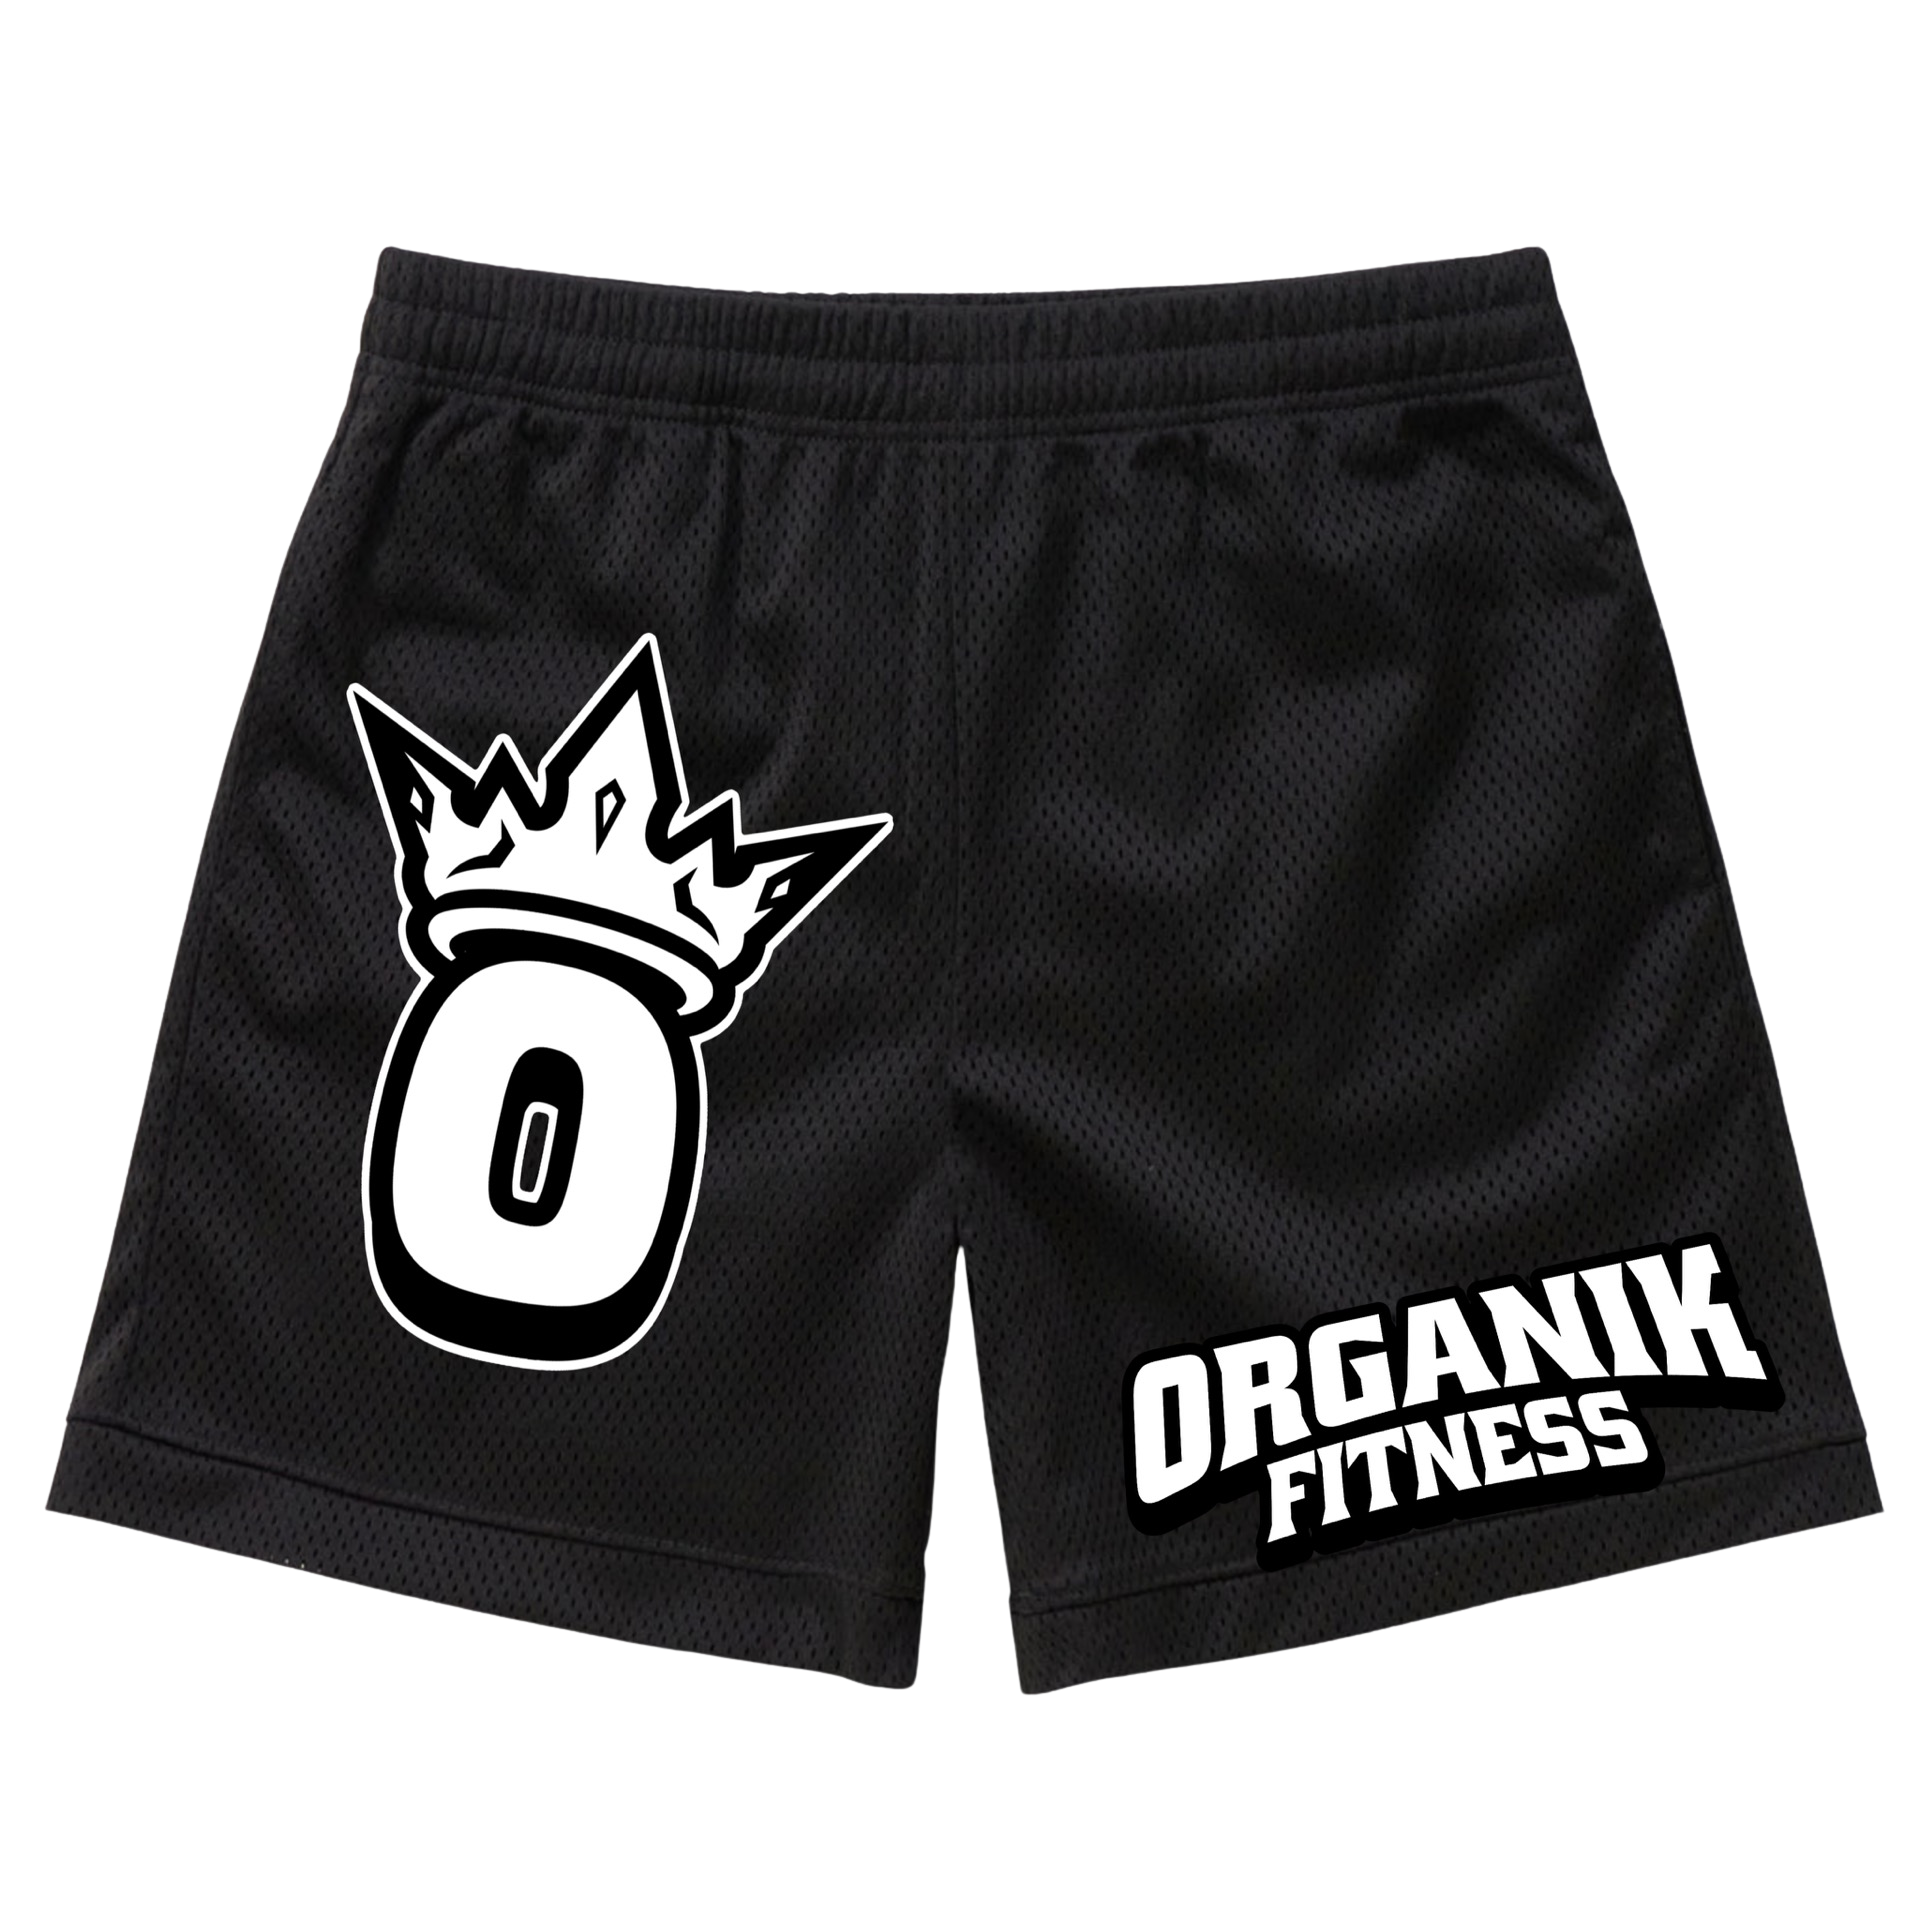 Organik Fitness - Men's Workout Mesh Shorts - Breathable - Black